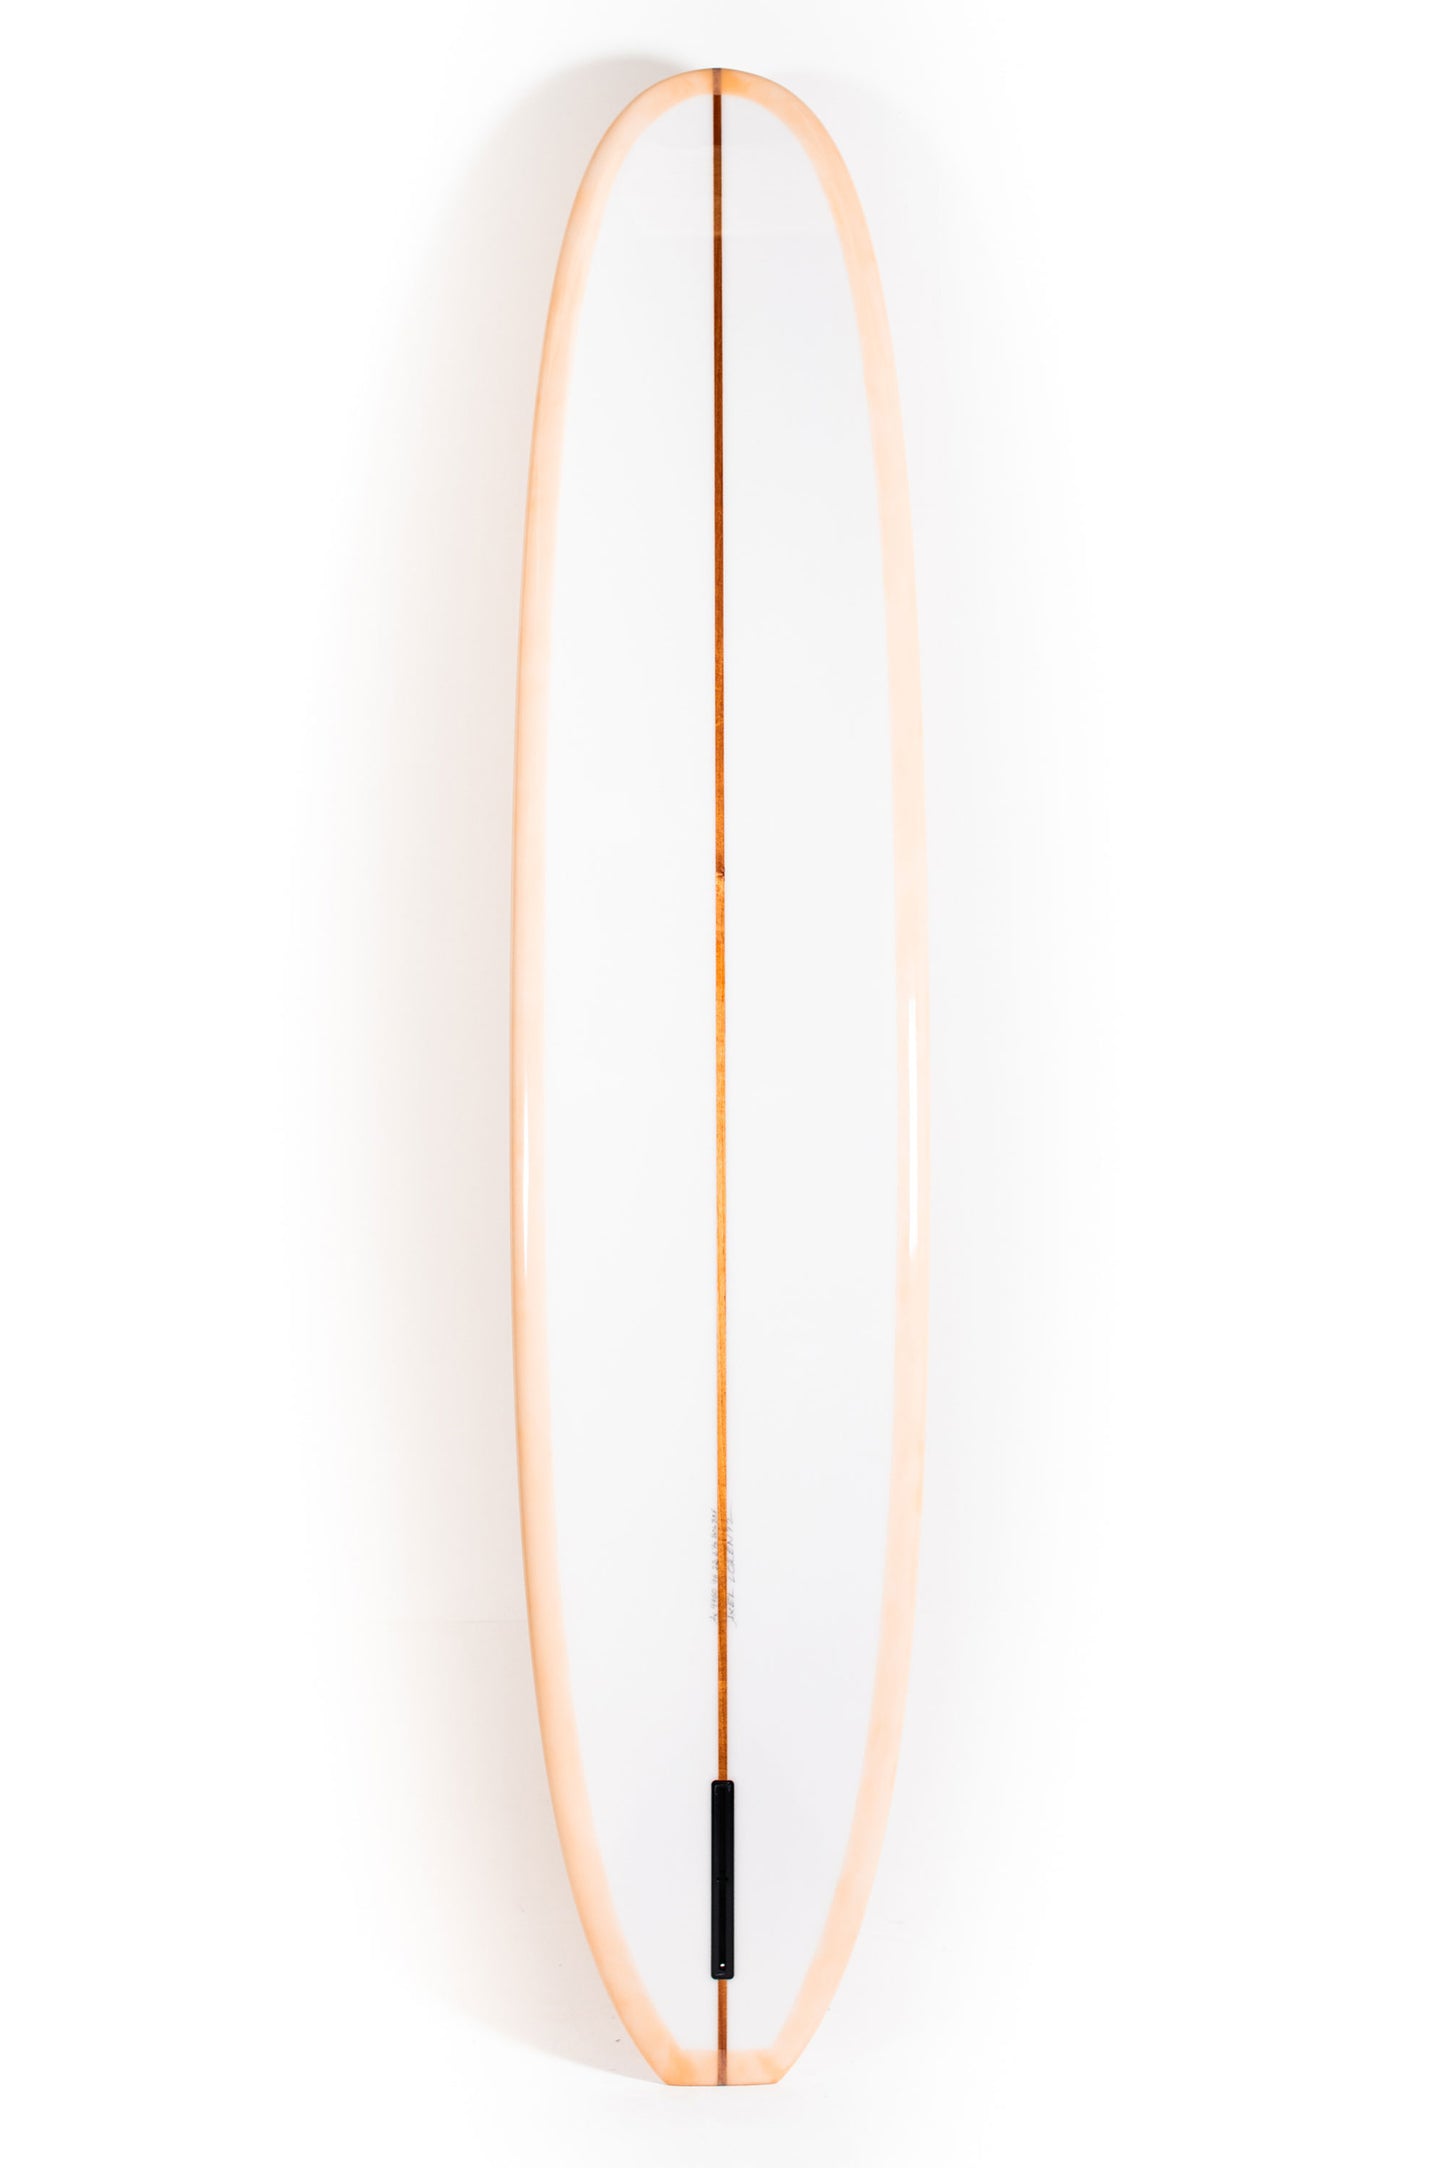 Pukas Surf Shop - Pukas Surfboards - MAYFLOWER by Axel Lorentz -  9'6" x 23 x 3,12 x 80L - AX09760